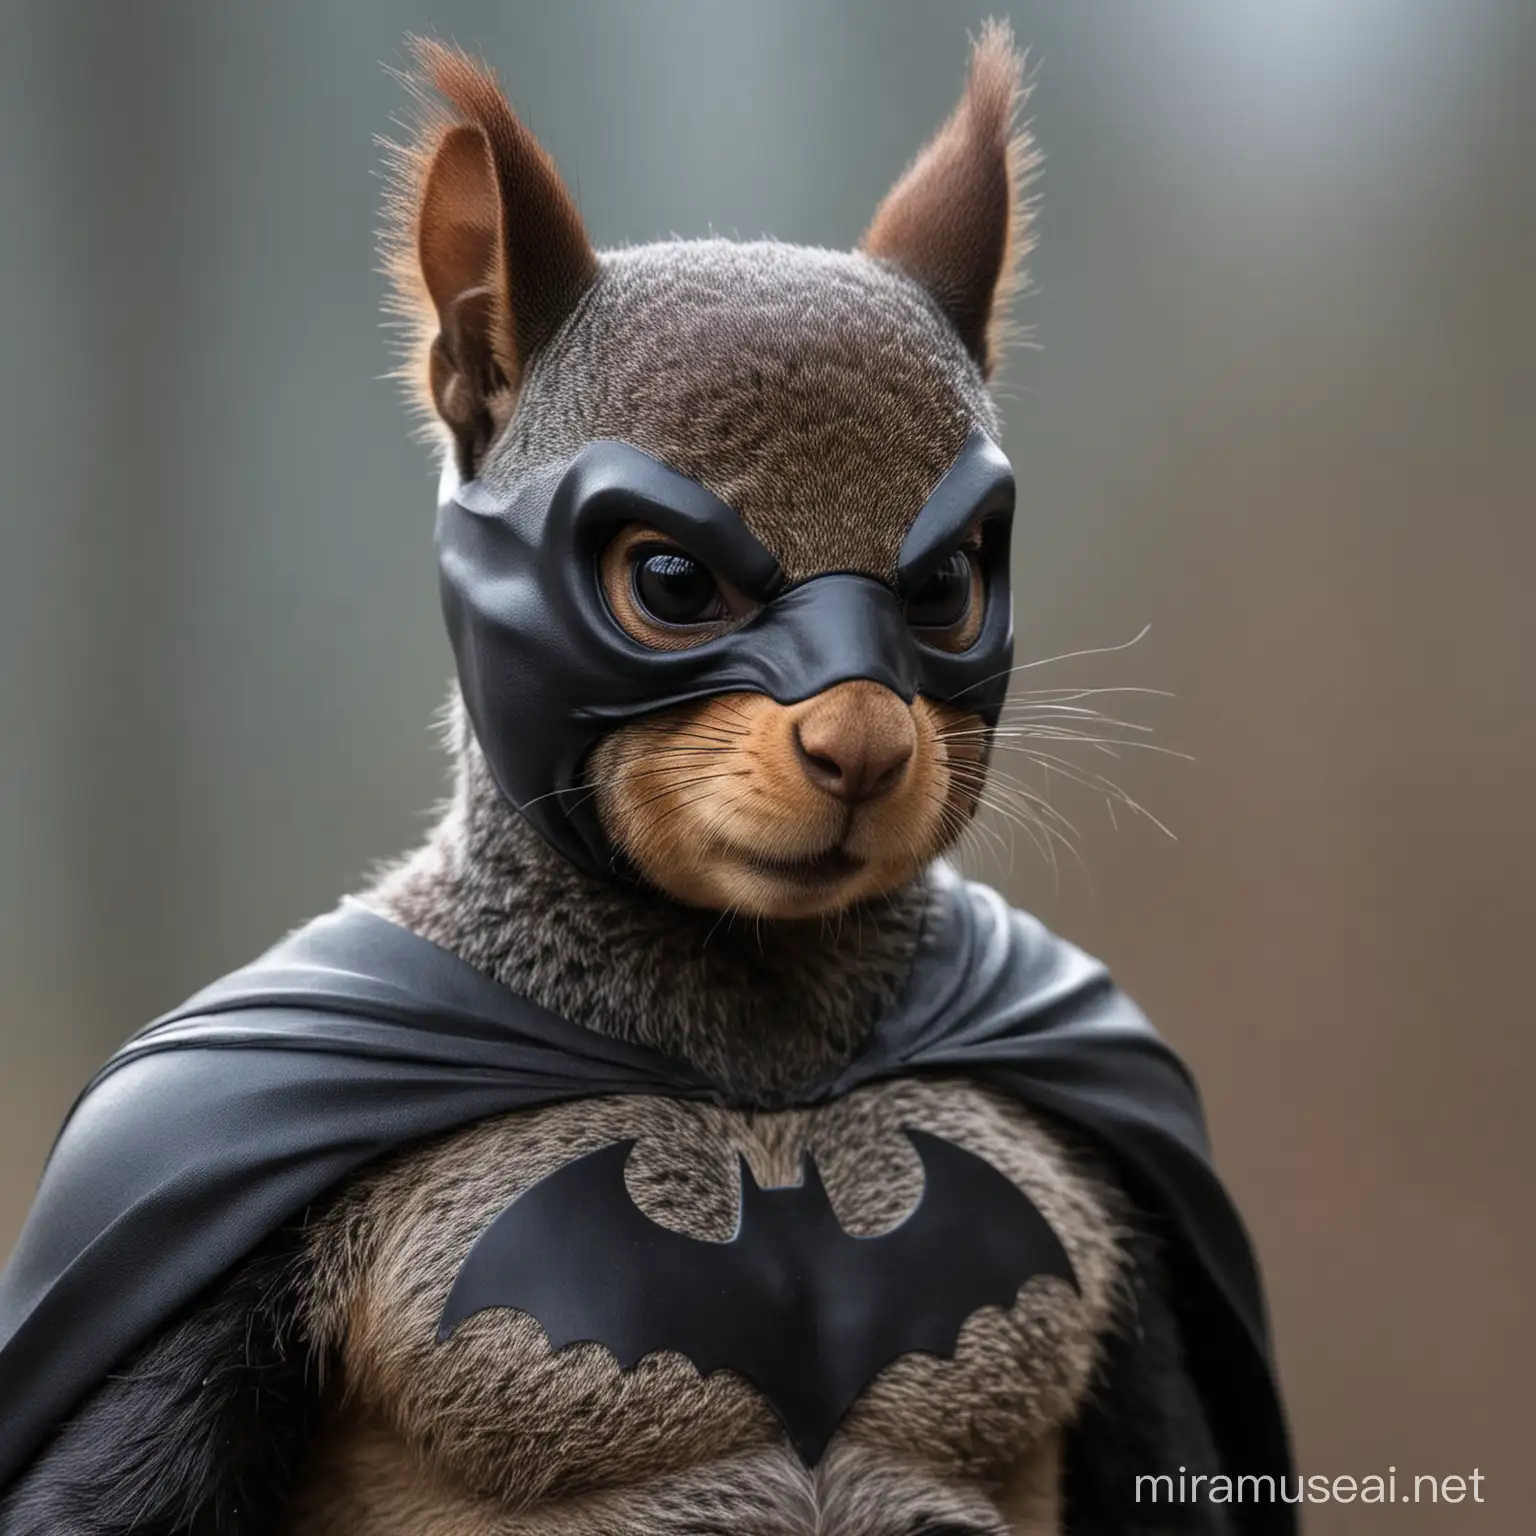 squirrel in a batman mask